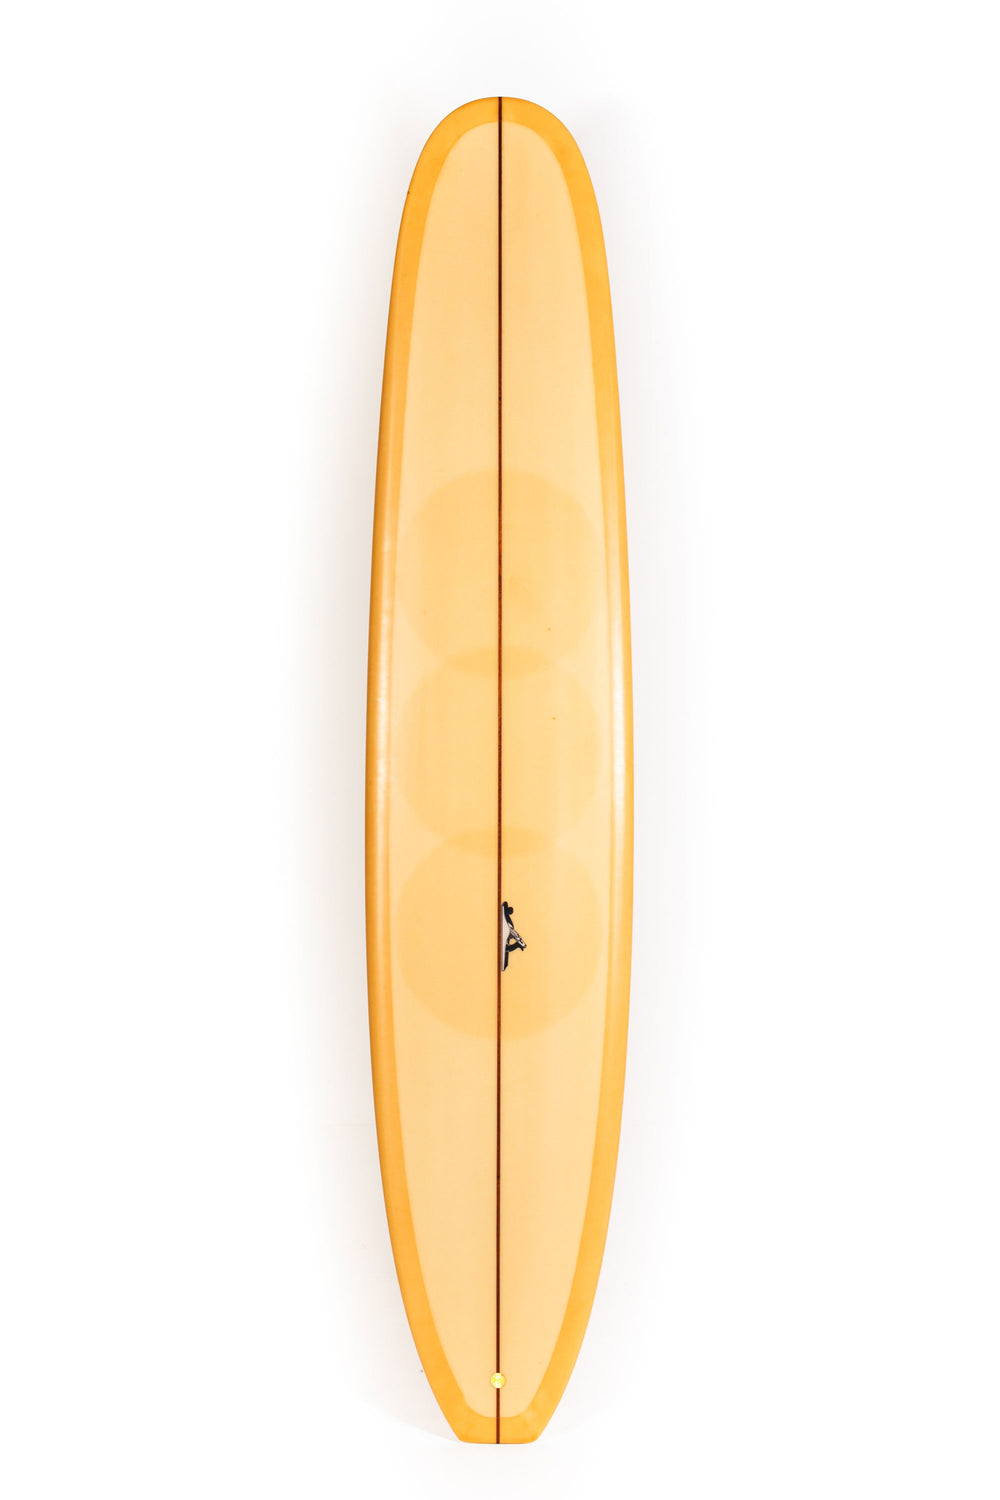 Pukas Surf Shop - Thomas Surfboards - KEEPER - 9'2